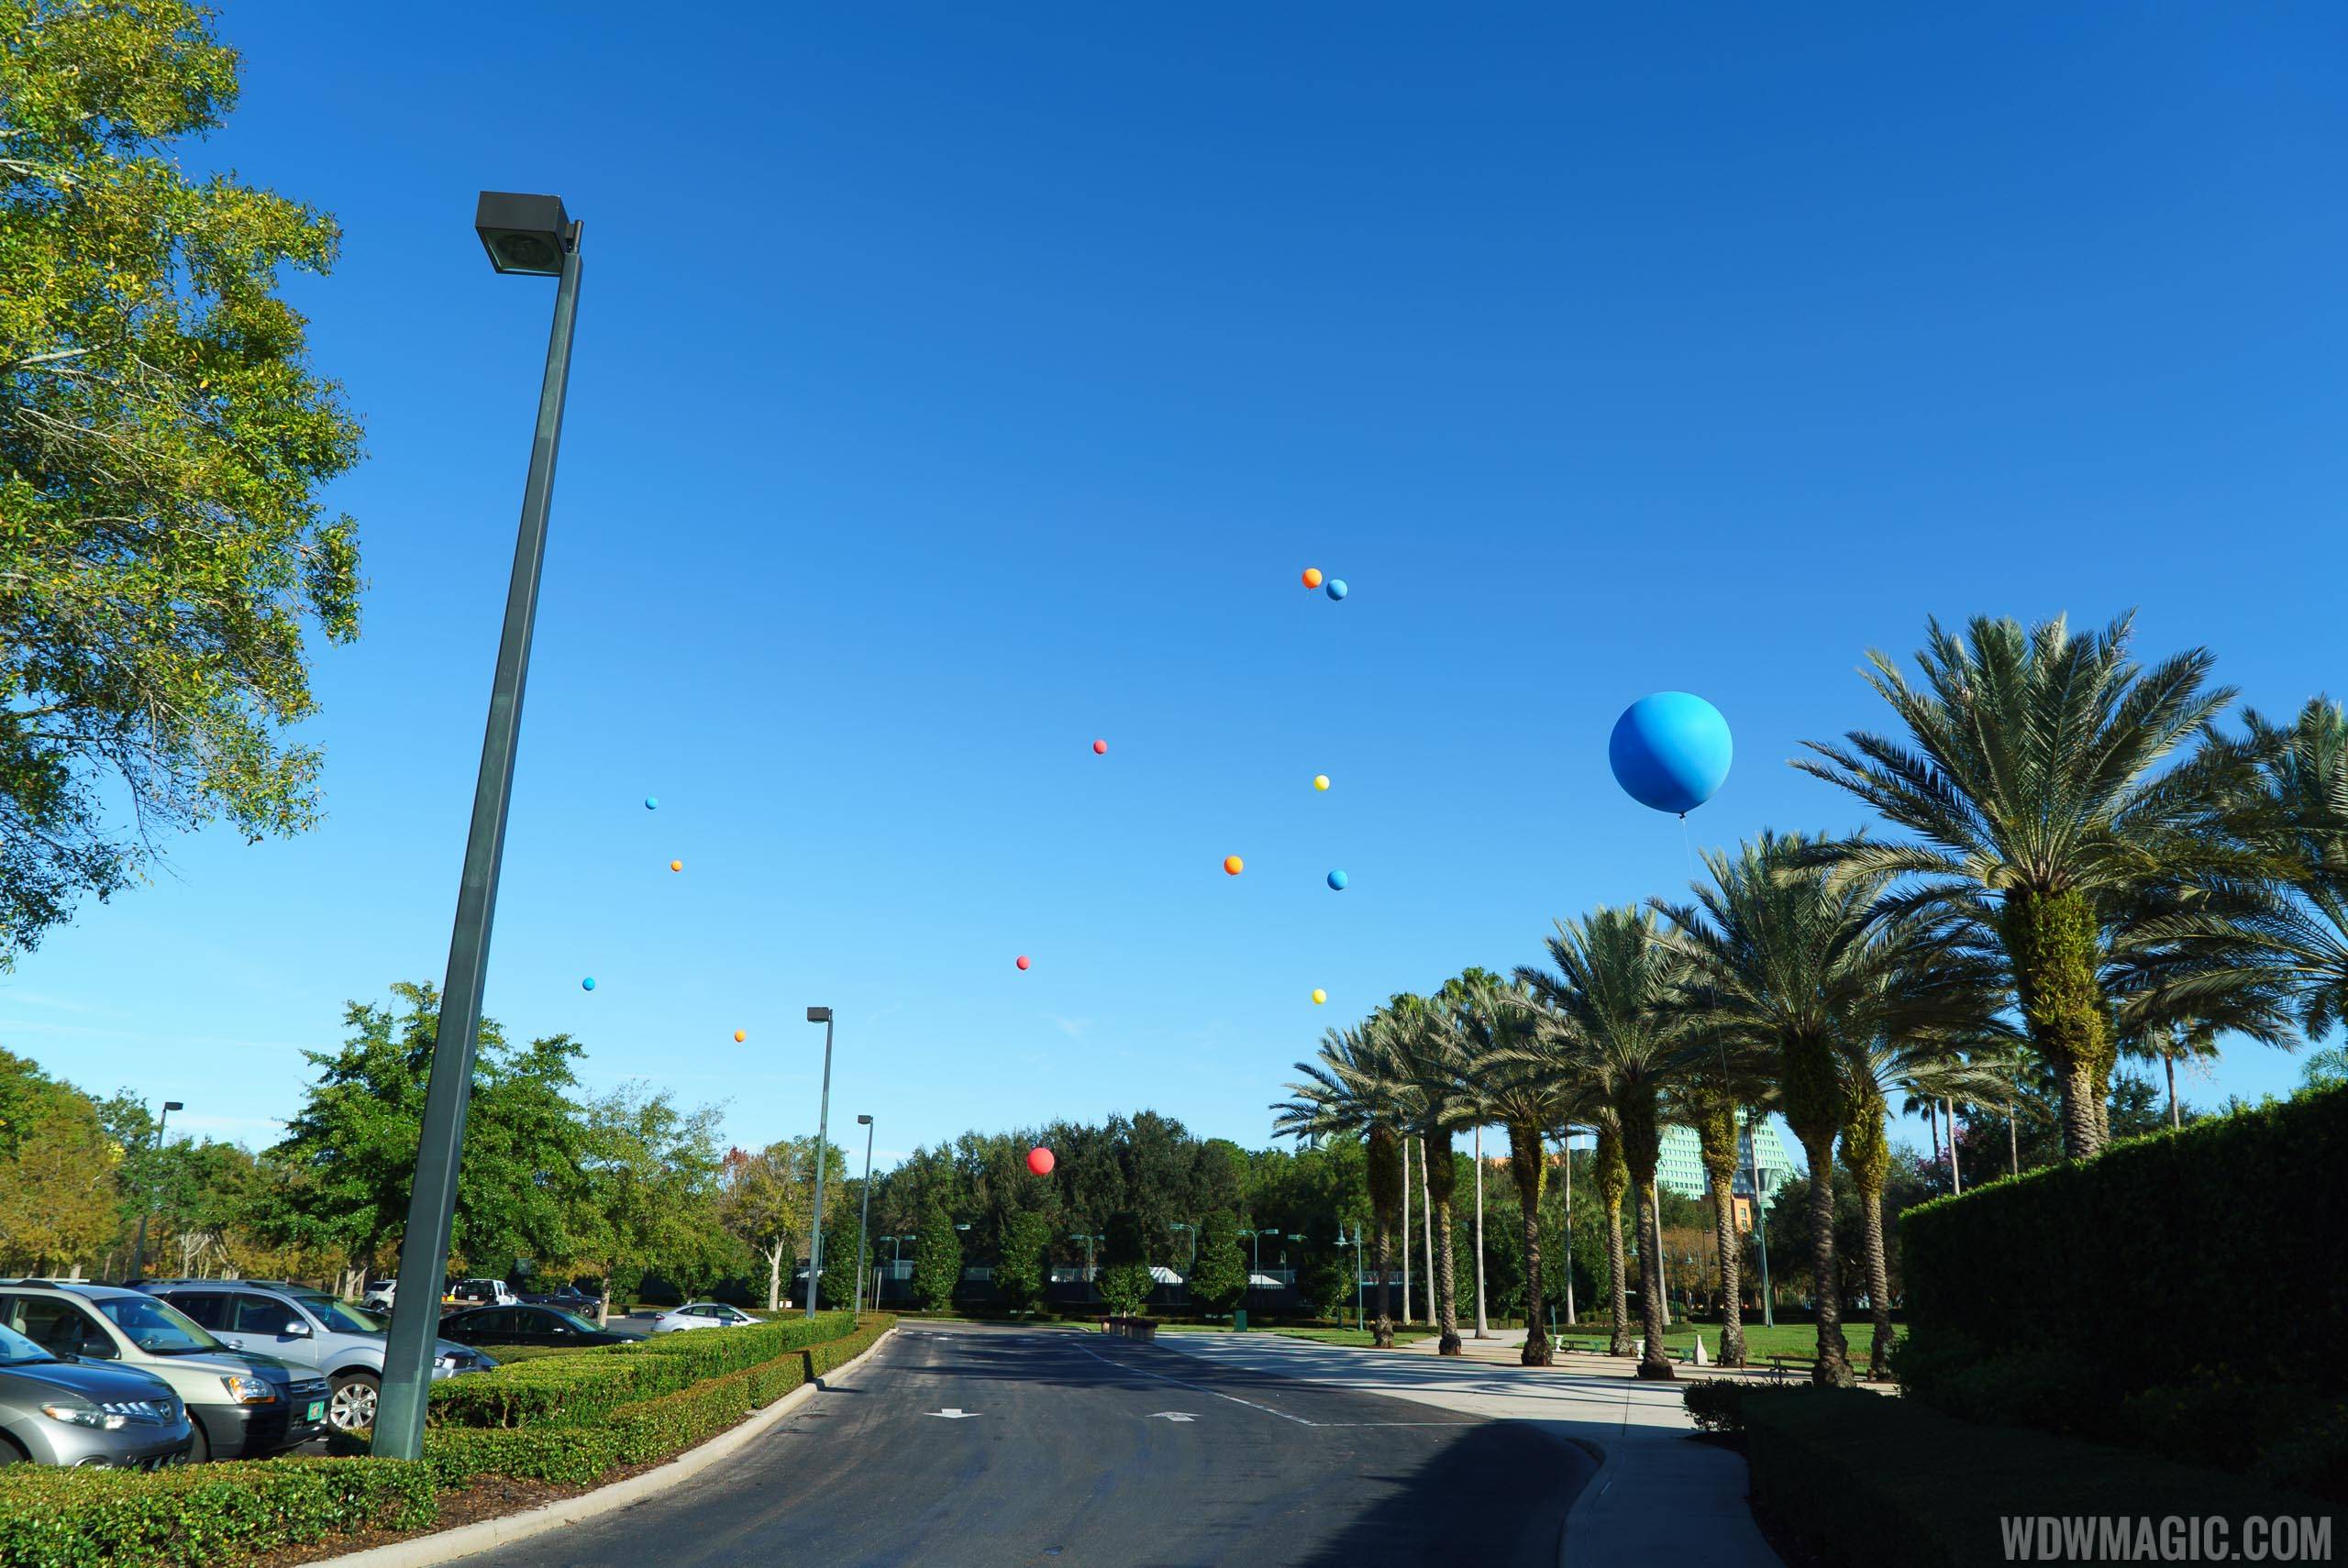 PHOTOS - Height test balloons over Fantasia Gardens parking lot area